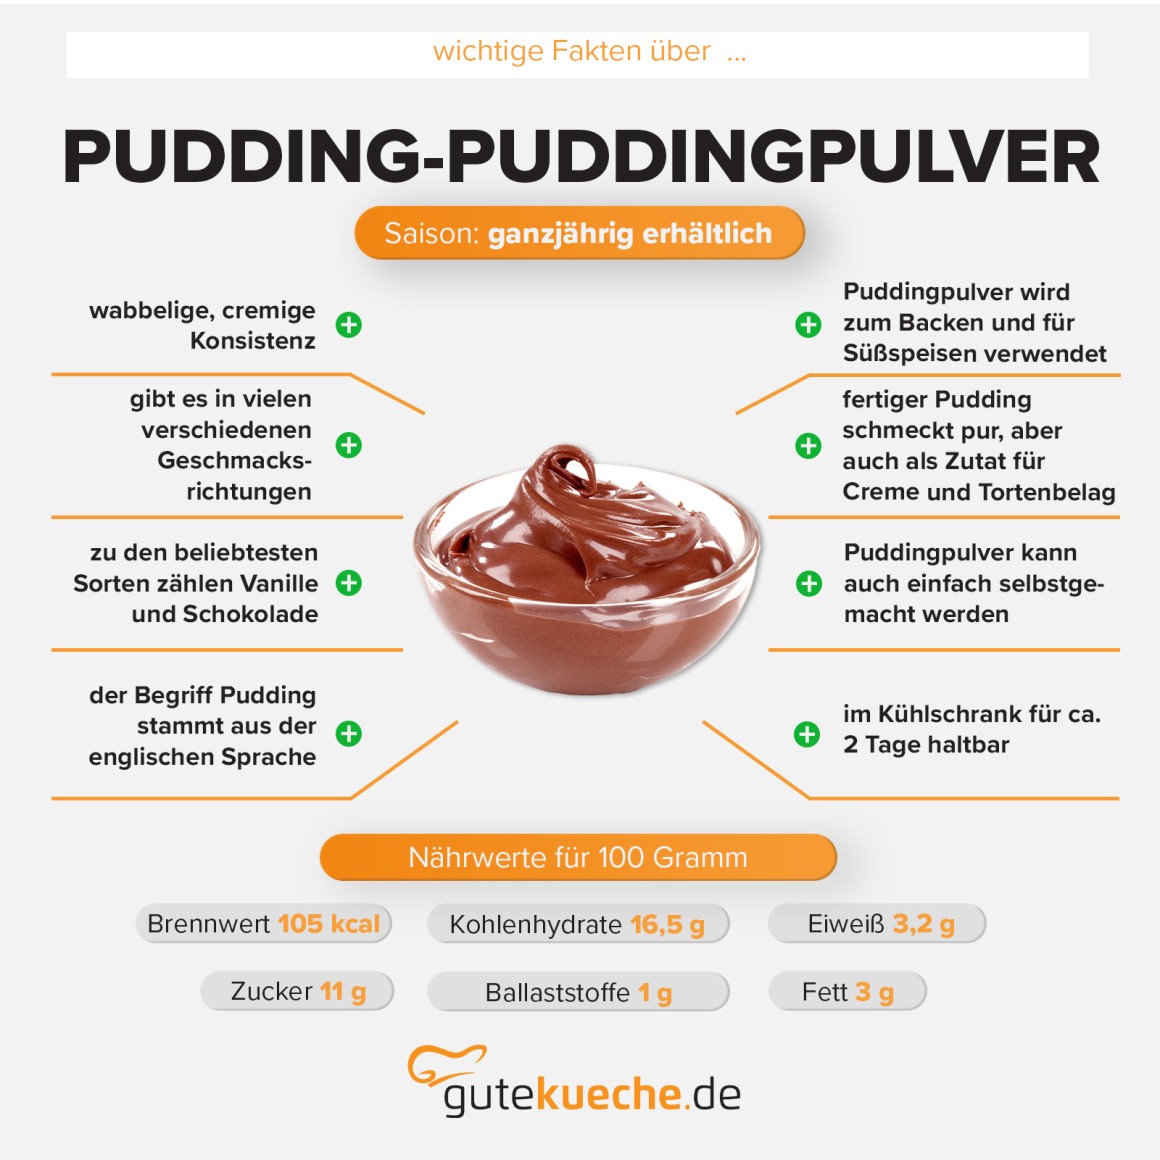 Pudding - Puddingpulver